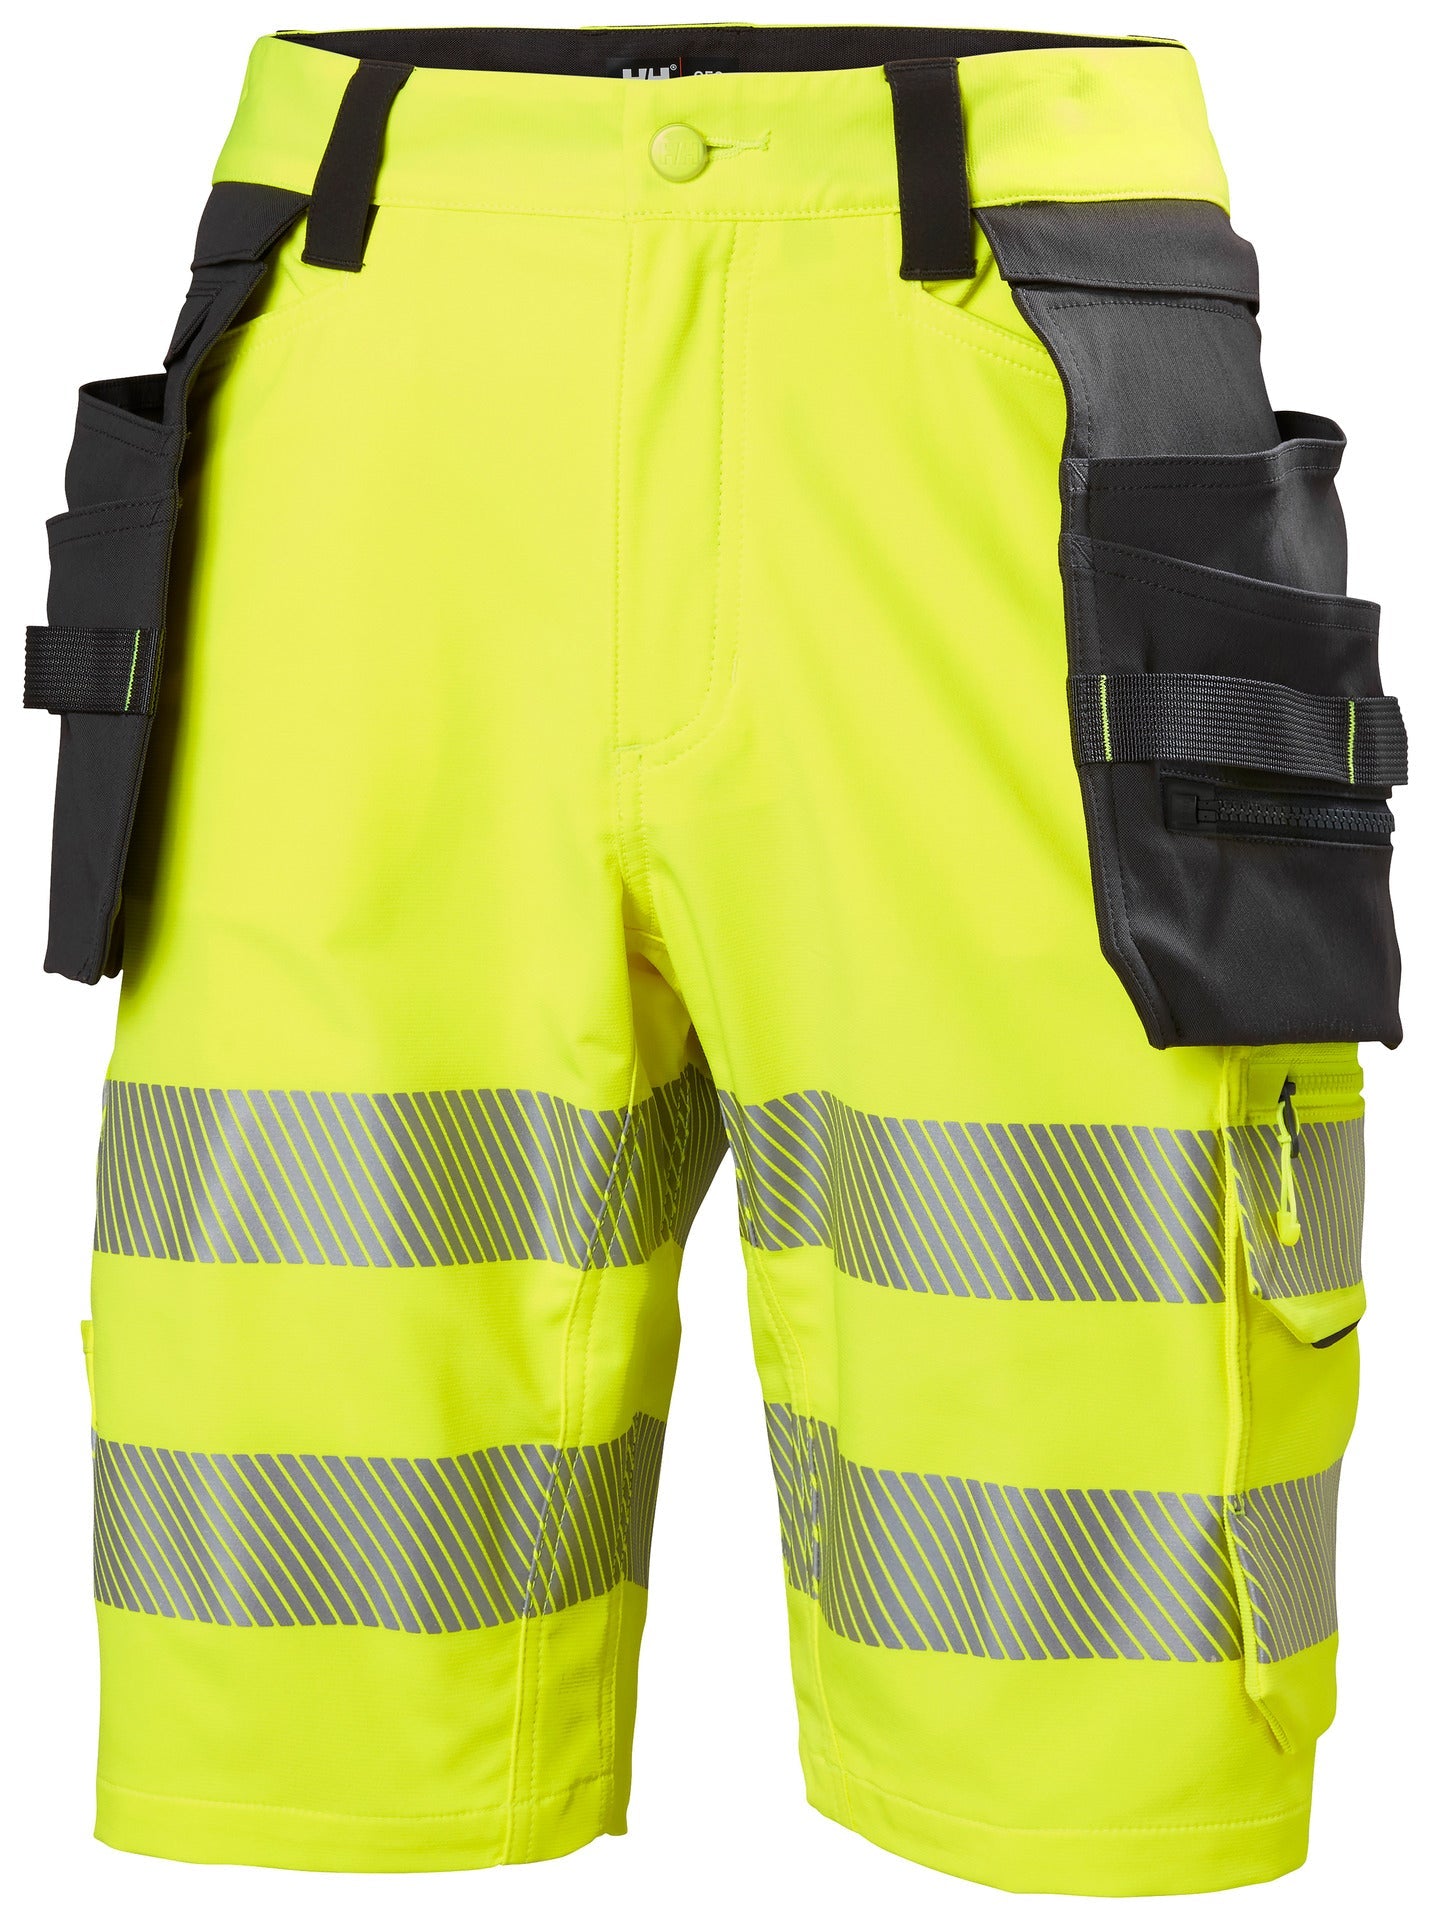 Helly Hansen Icu Construction Shorts Cl 1 - Yellow